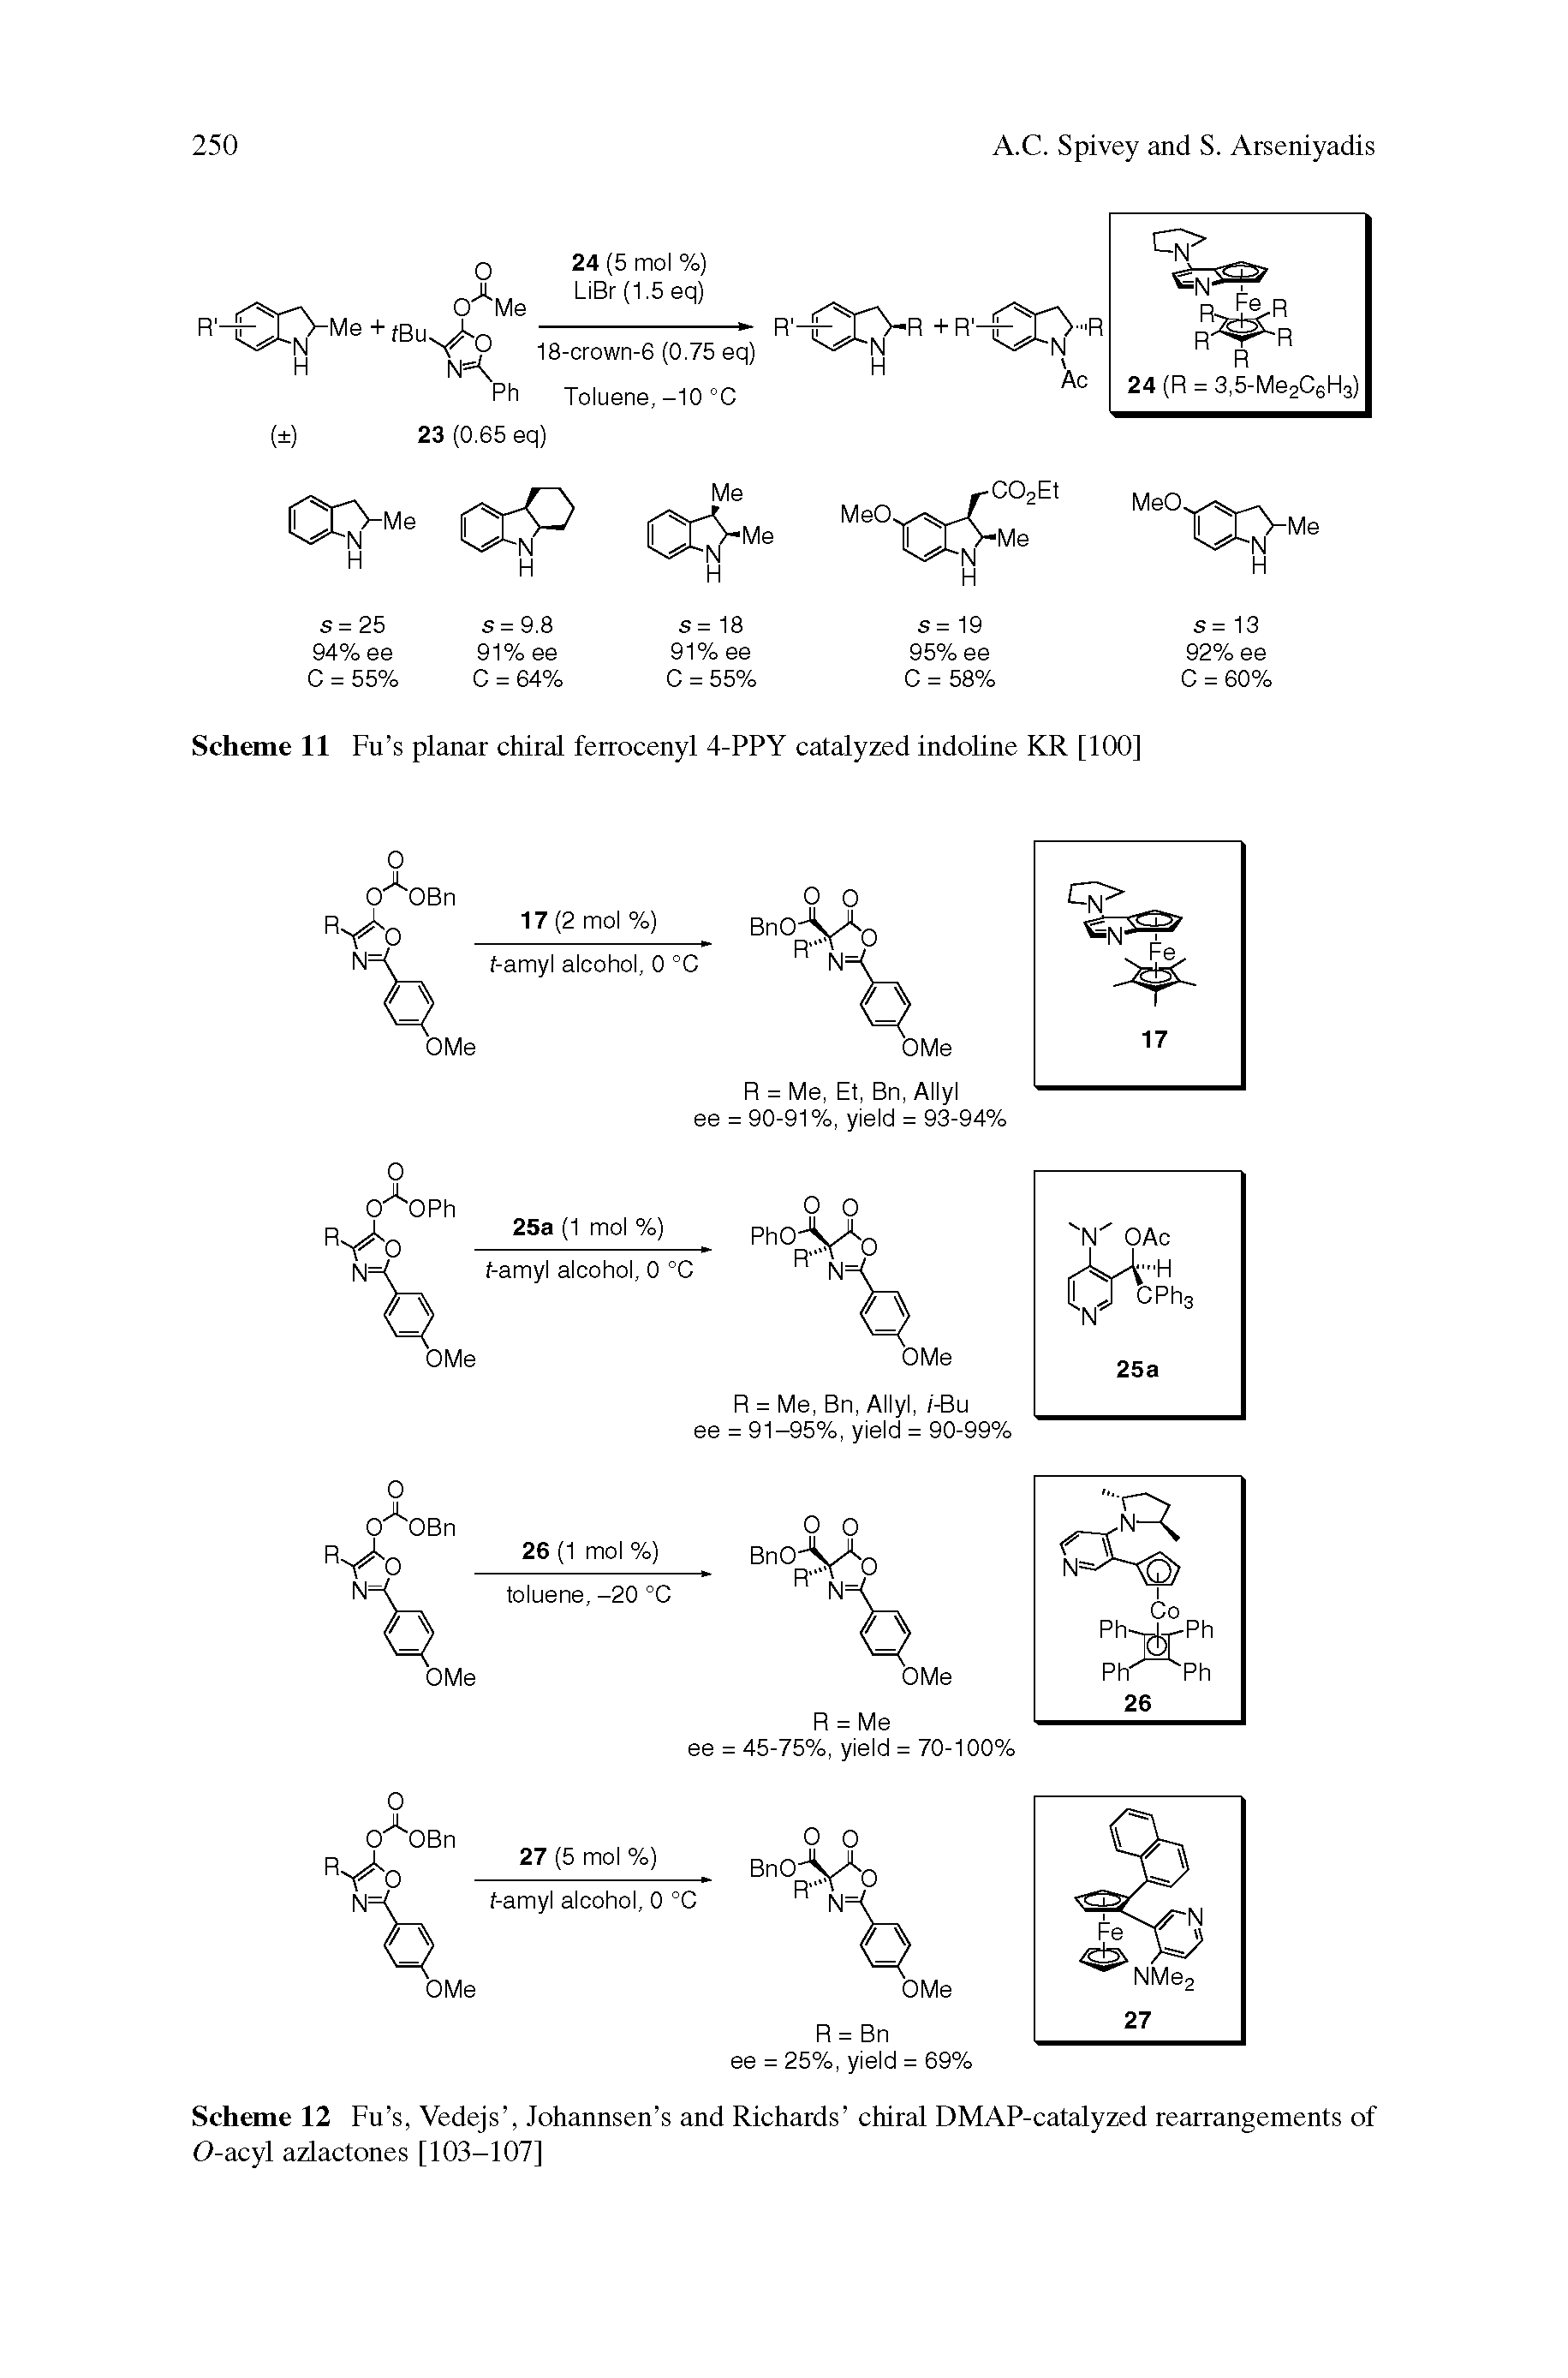 Scheme 12 Fu s, Vedejs , Johannsen s and Richards chiral DMAP-catalyzed rearrangements of O-acyl azlactones [103-107]...